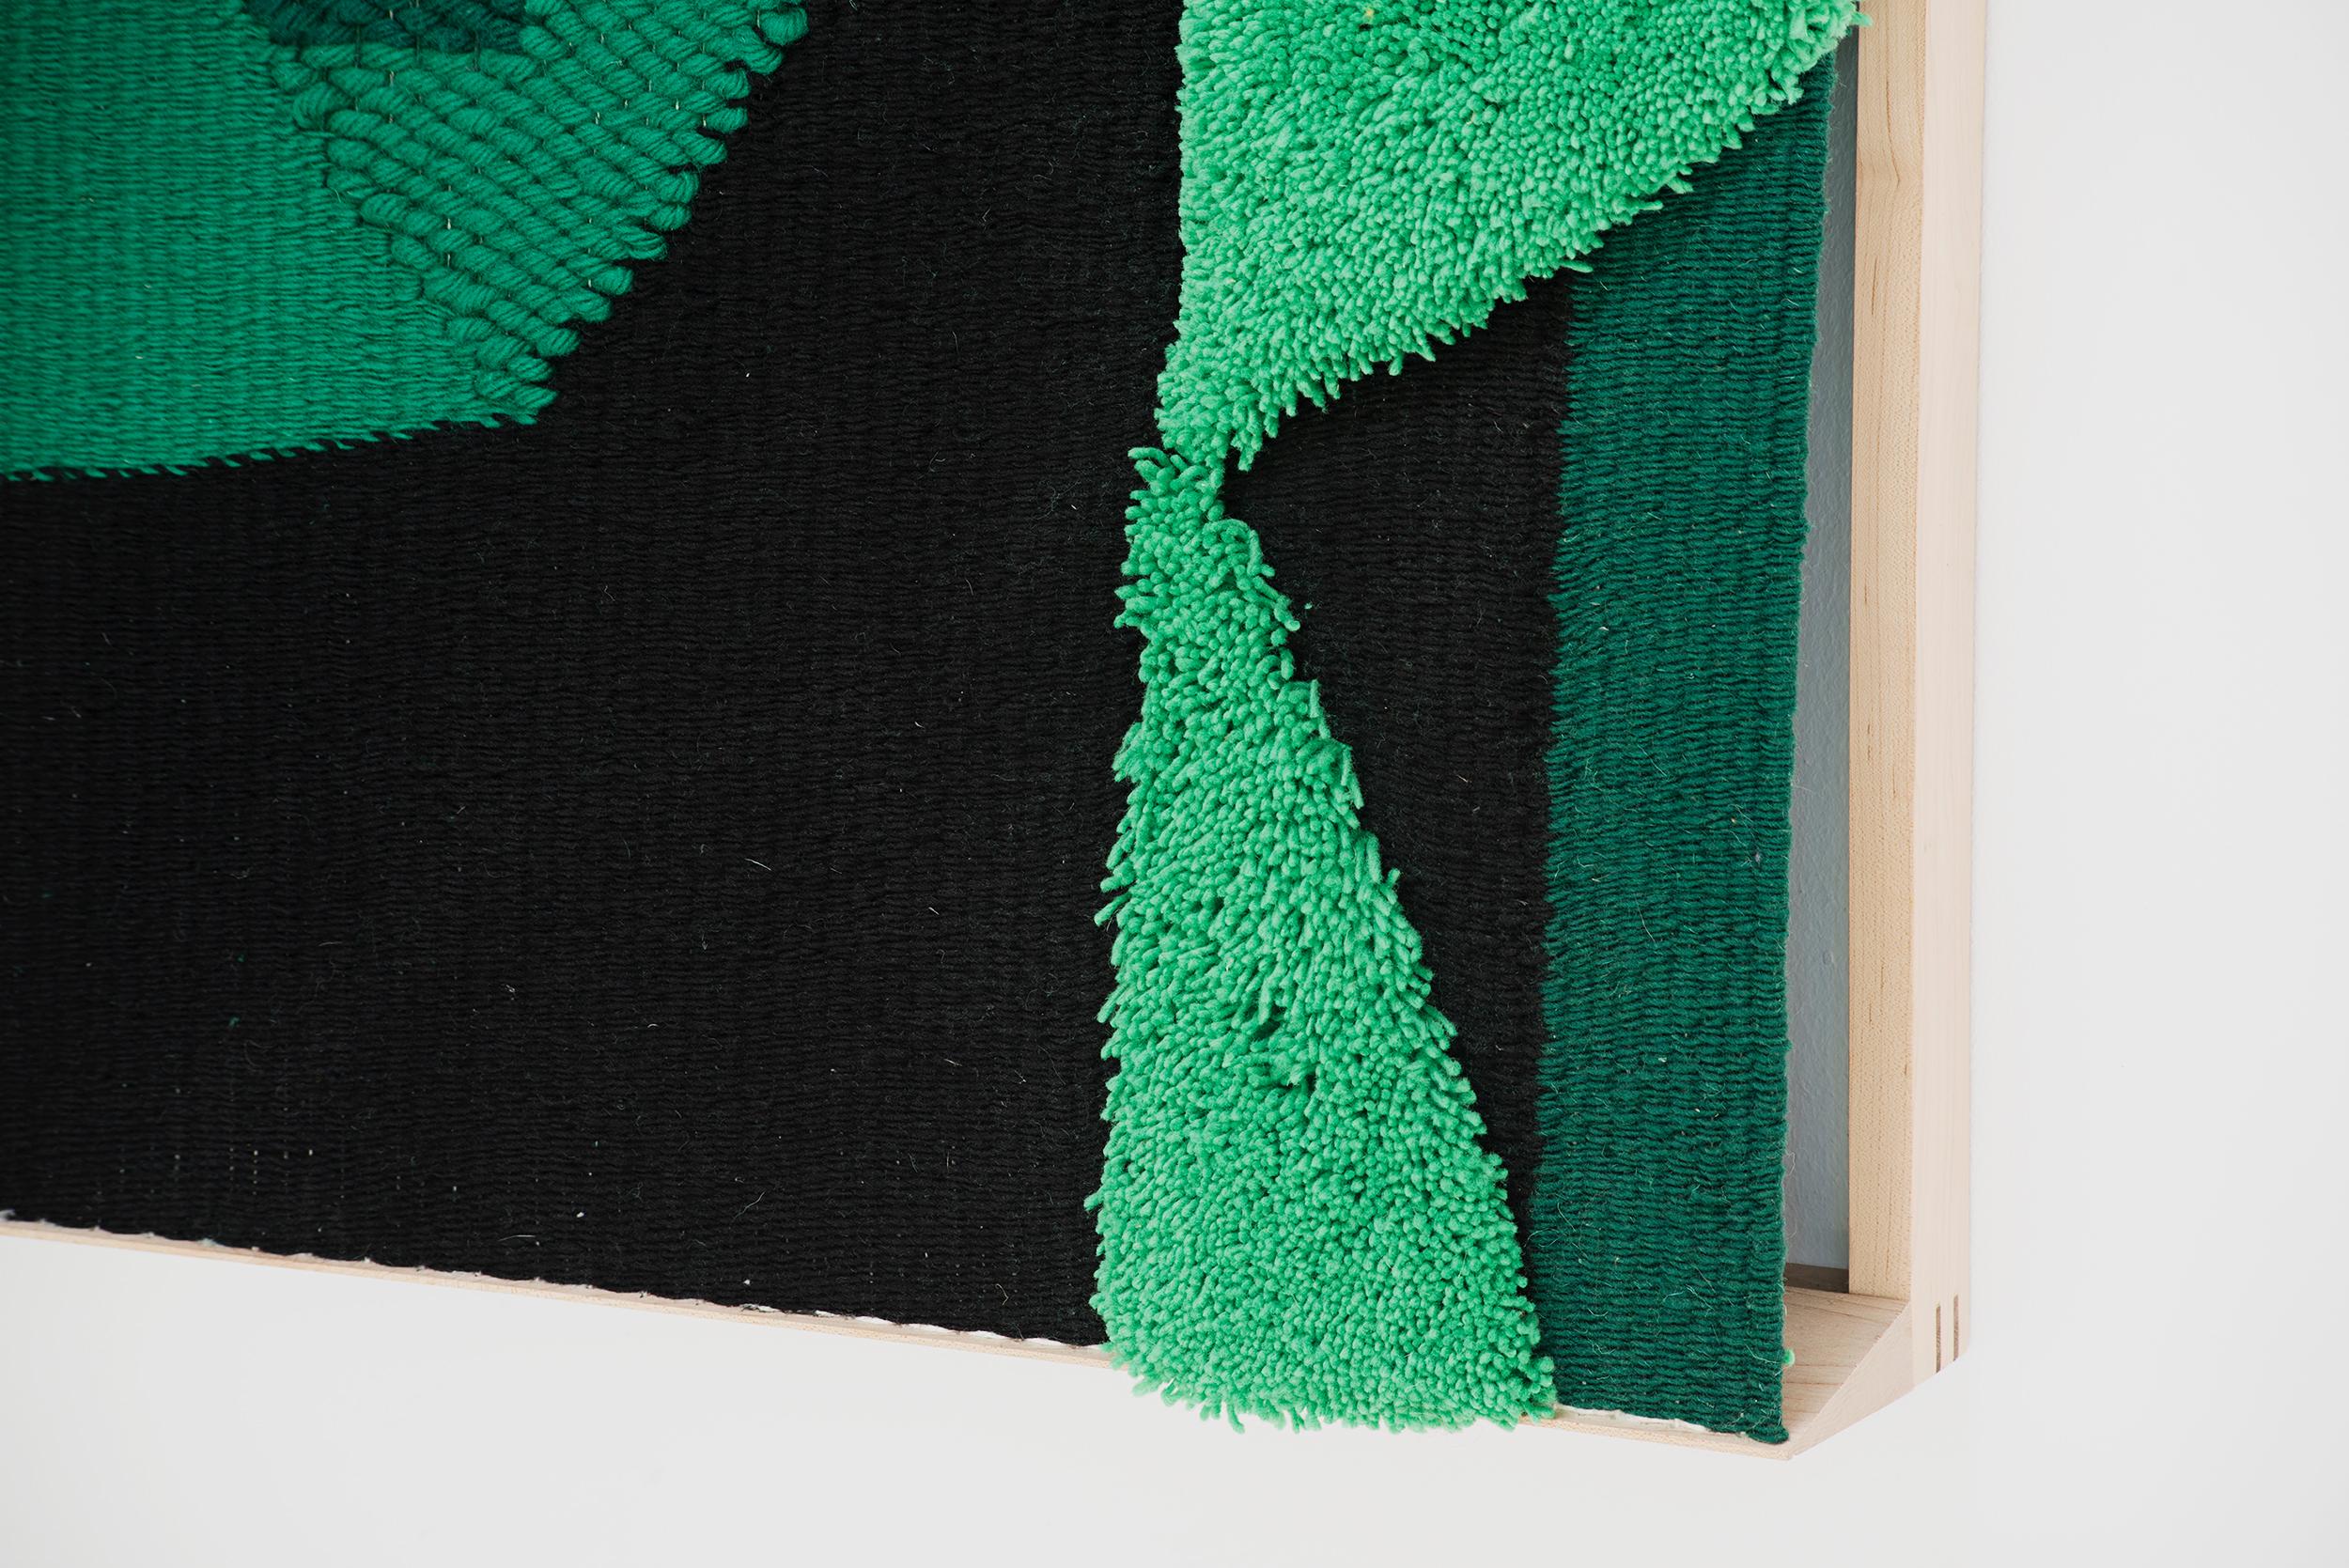 Maple and merino wool
Measure: 100 x 136 x 36 cm
39.37 x 53.54 x 14.17 in.


